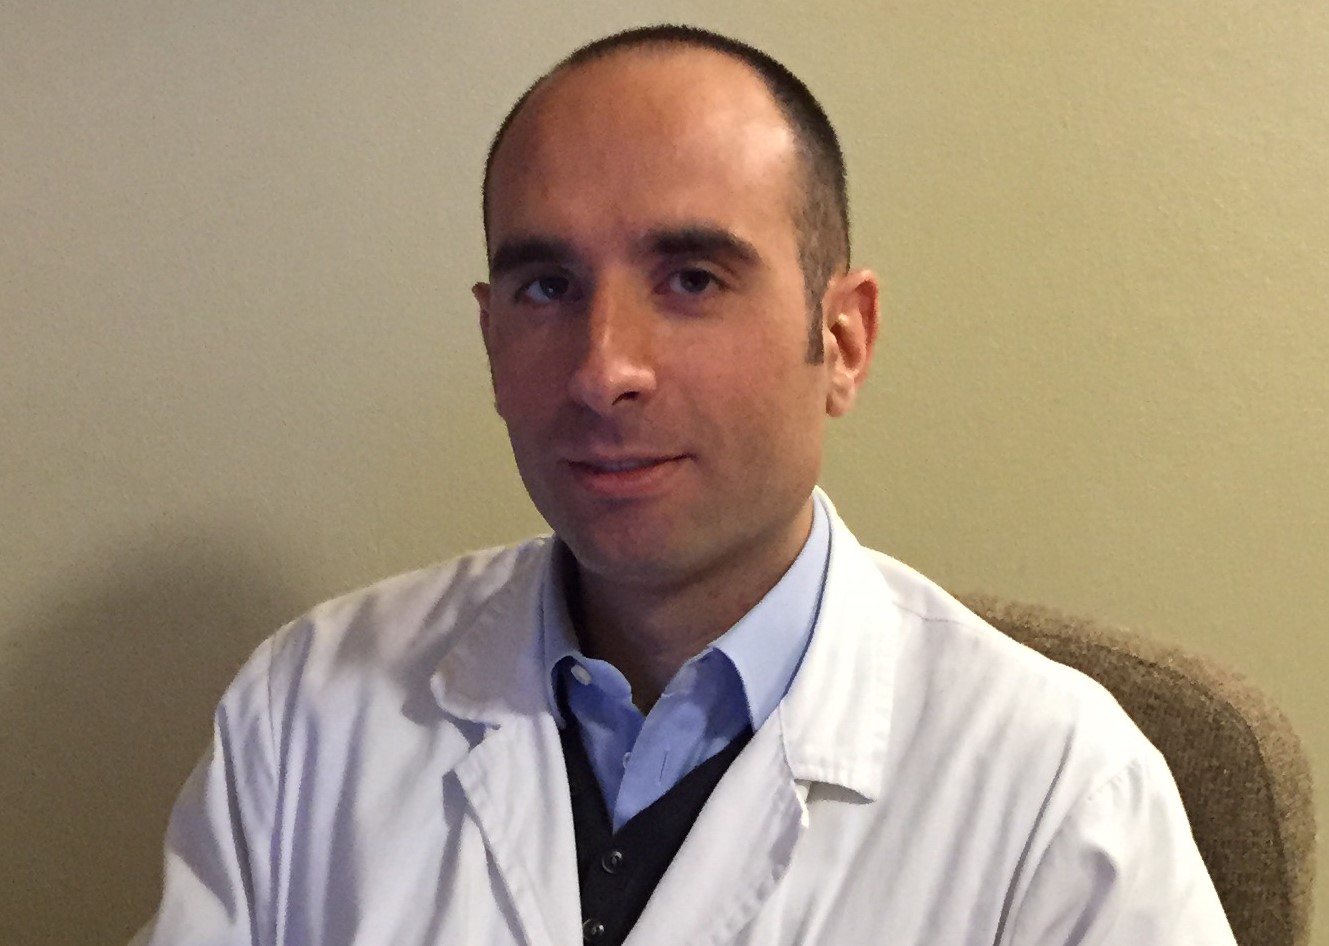 Dott. Davide Barletta urologo e andrologo